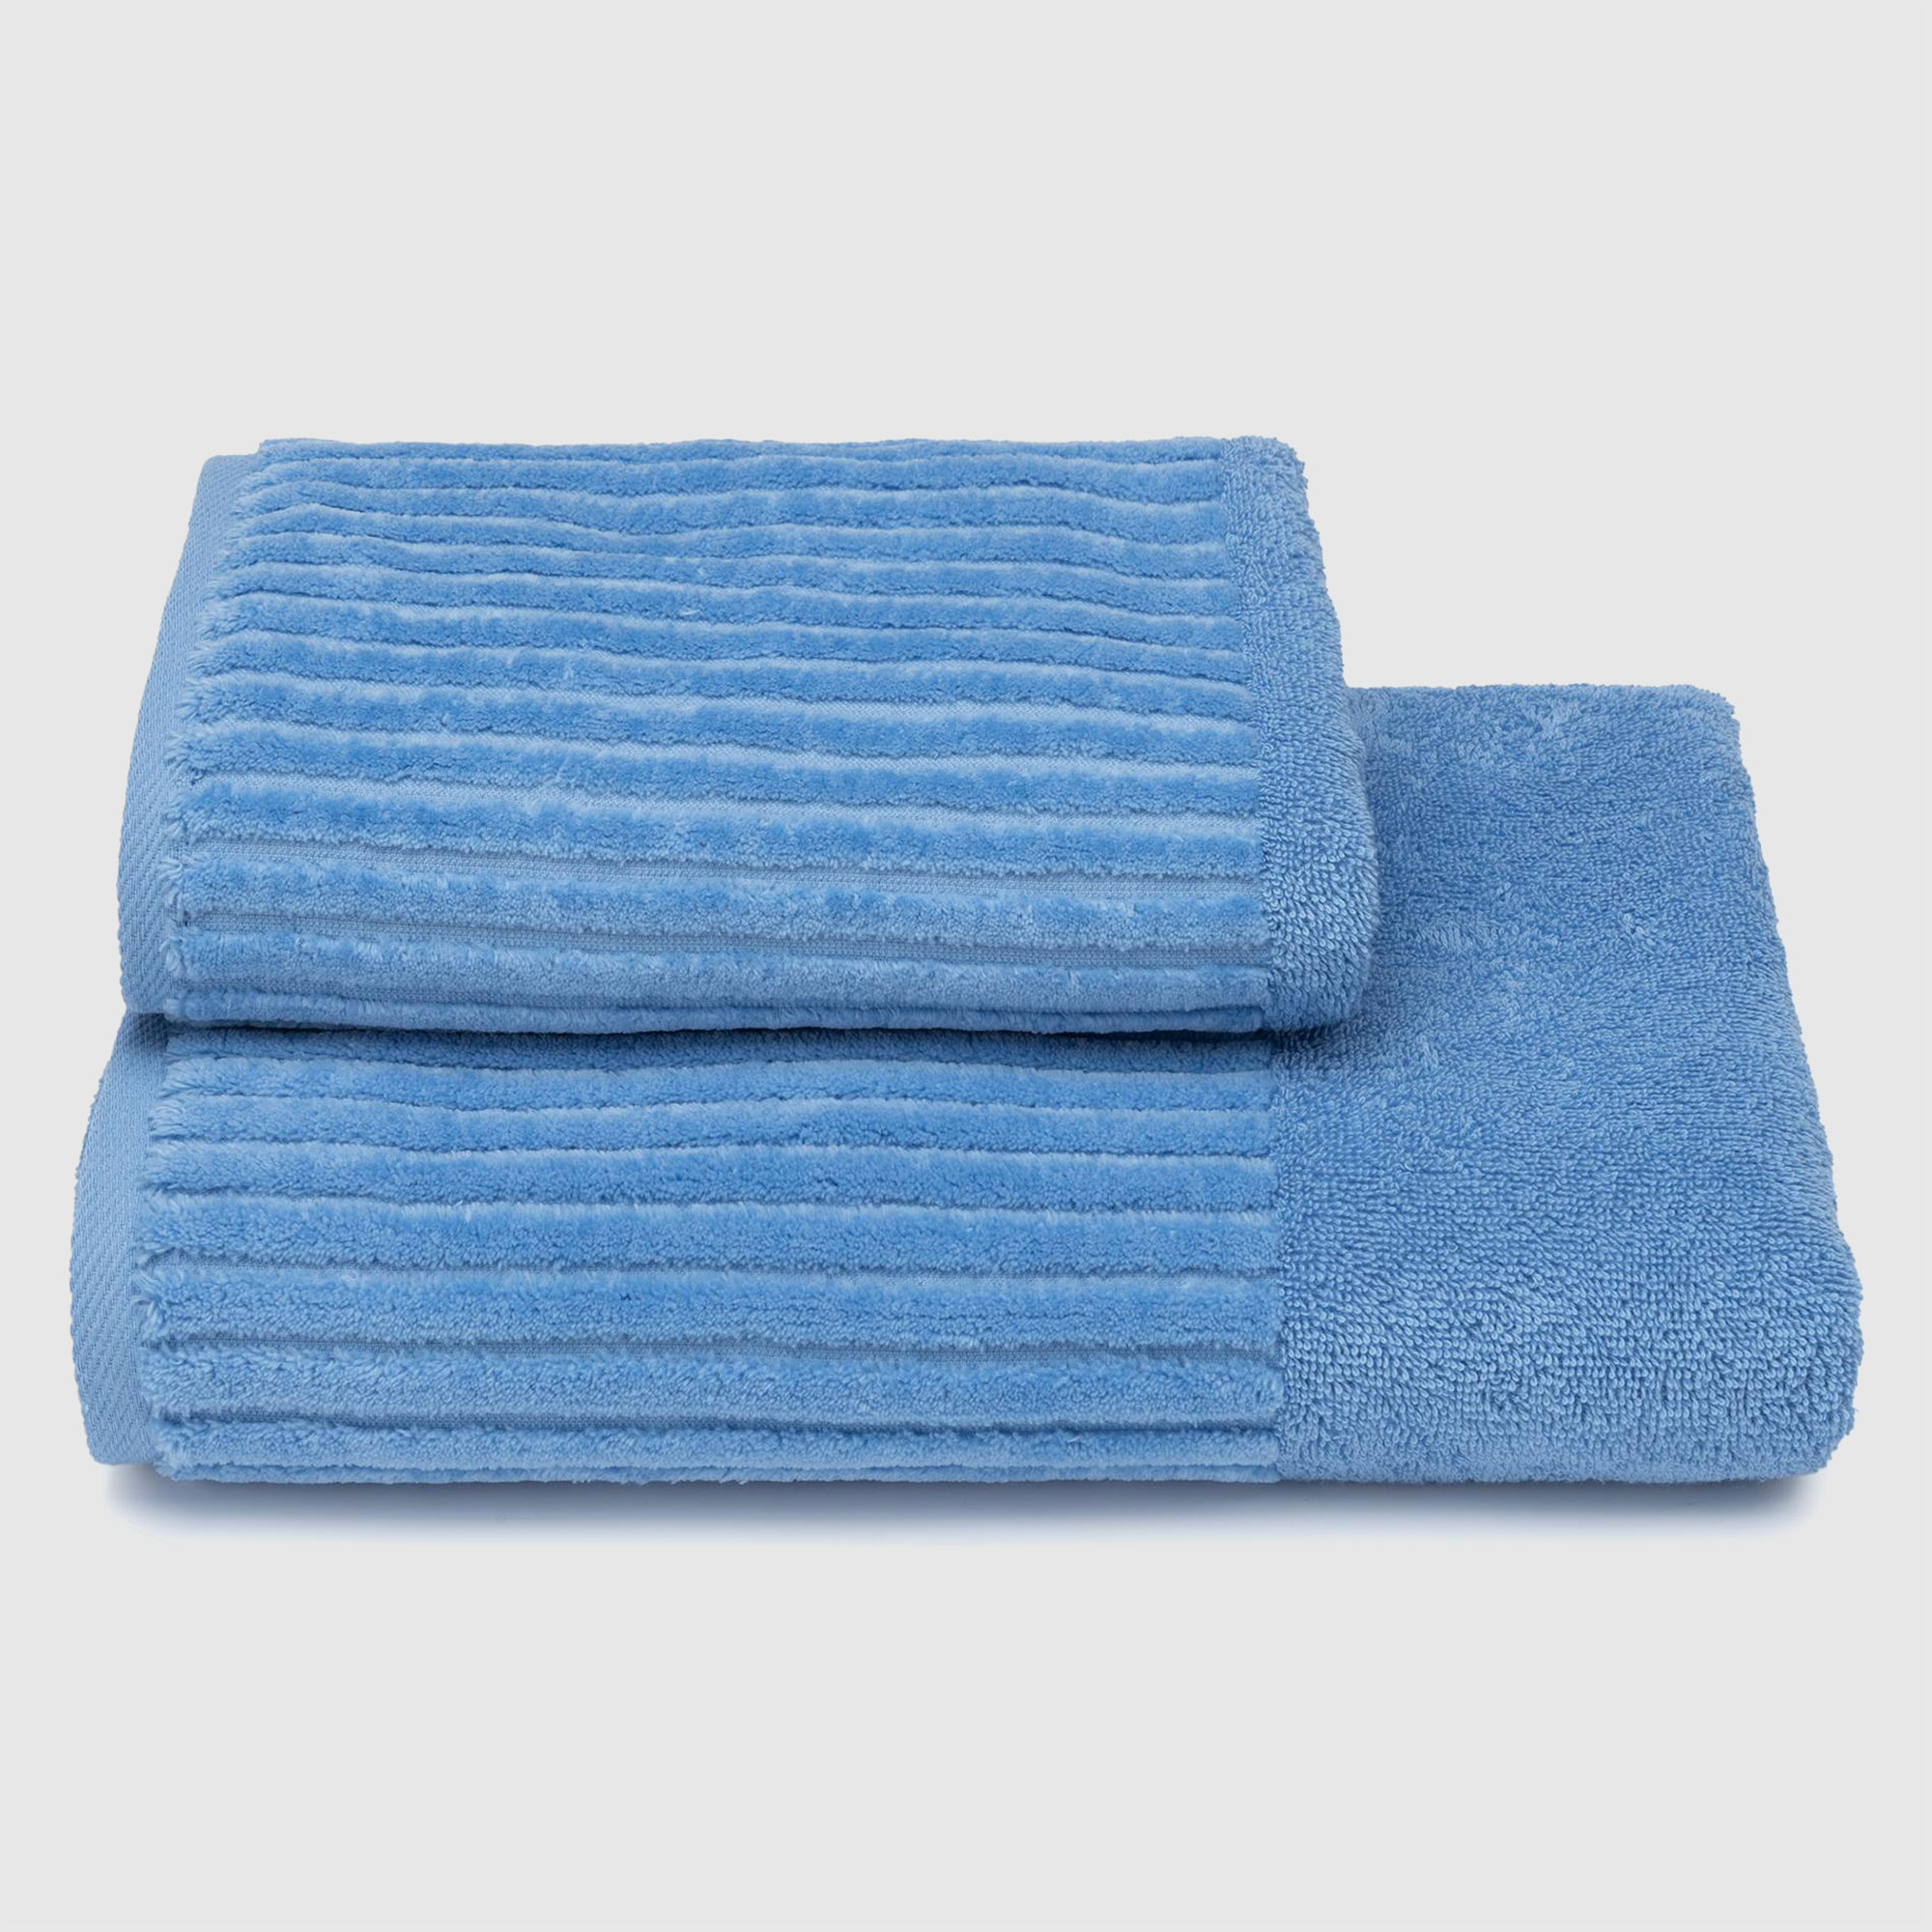 Махровое полотенце Cleanelly Basic Cascata голубое 50х90 см полотенце сицилия голубой р 50х70